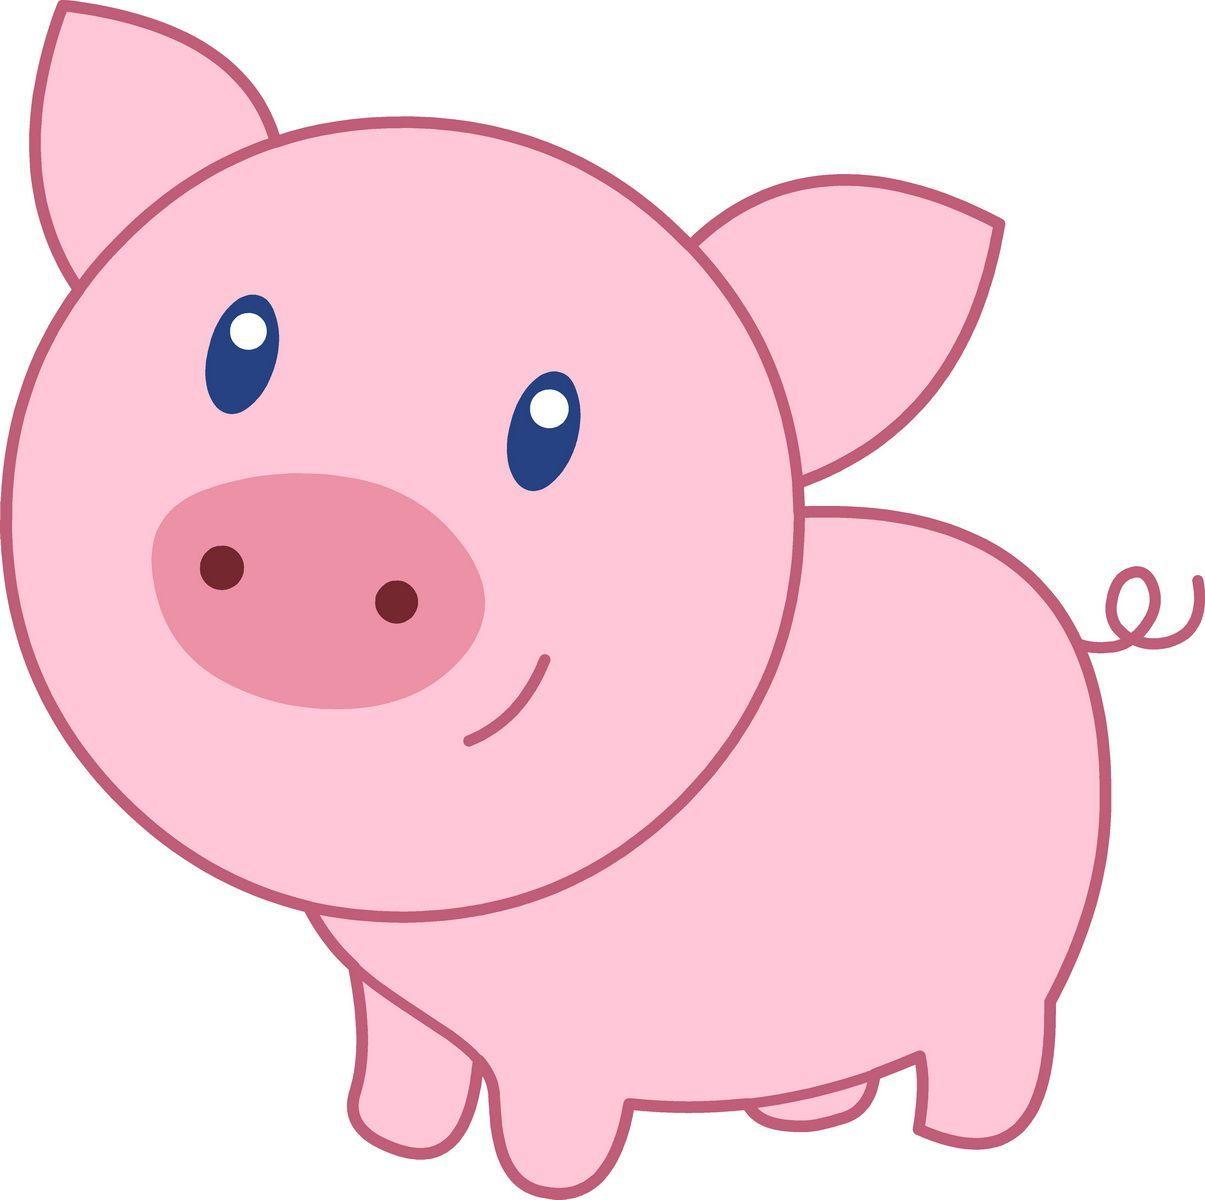 Cute Pig Cartoon 07 Wallpaper. Pig Image. Cartoon